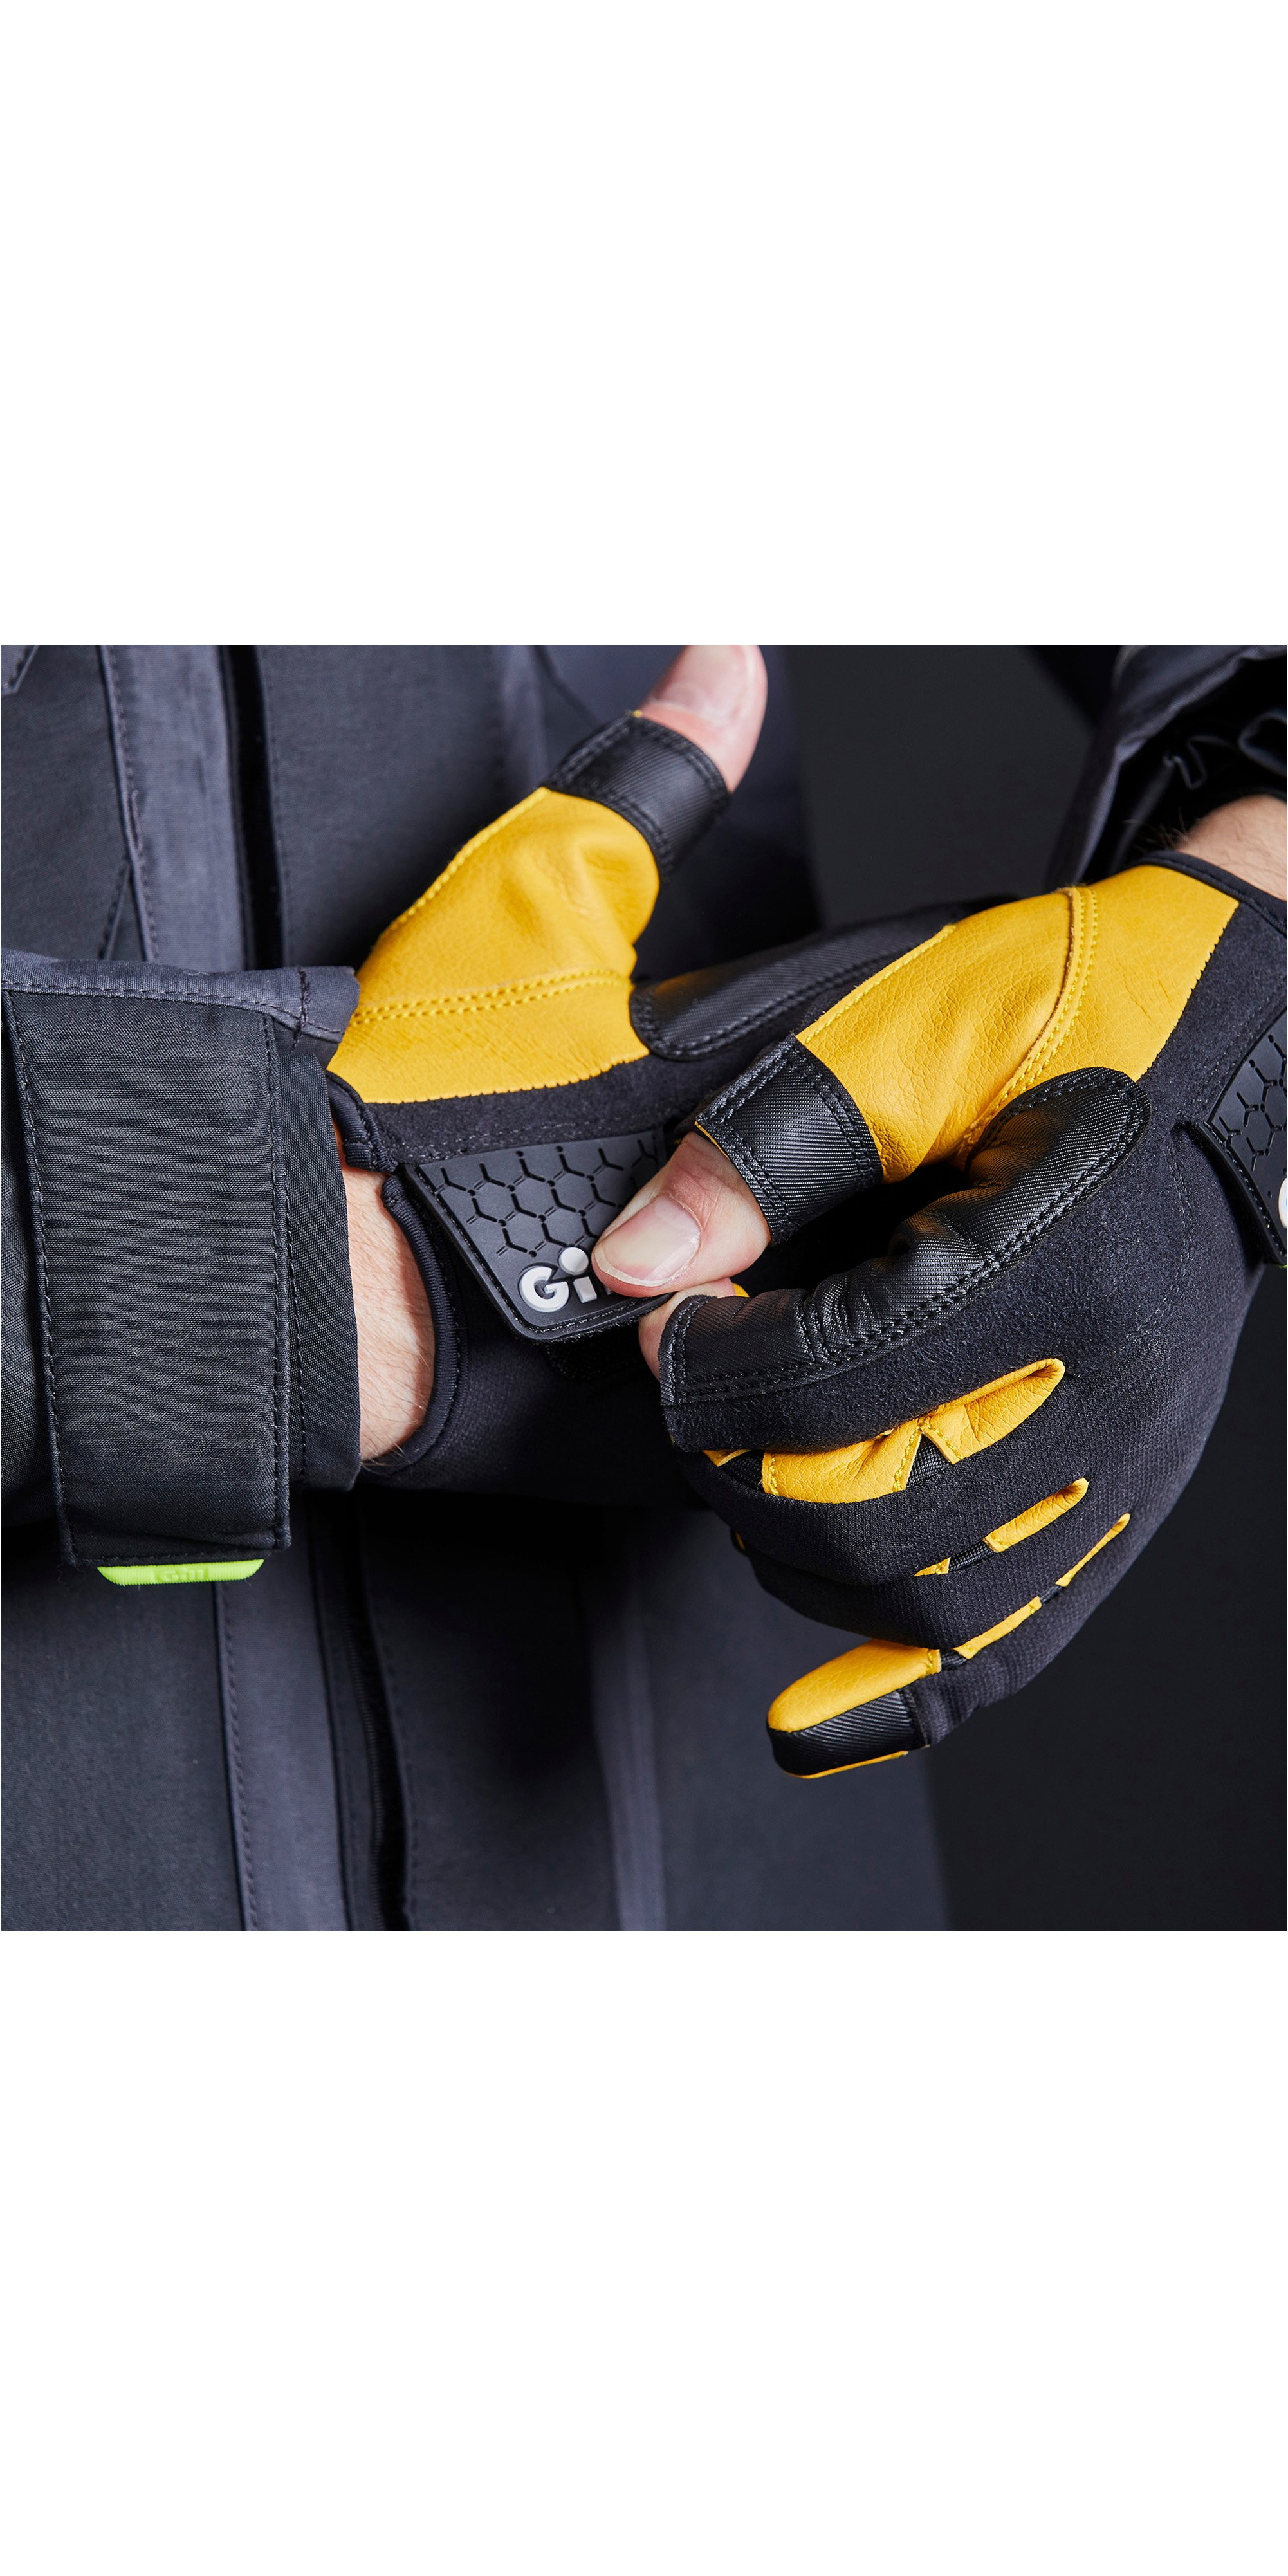 Gill 2024 Pro Long Finger Sailing Gloves - Black